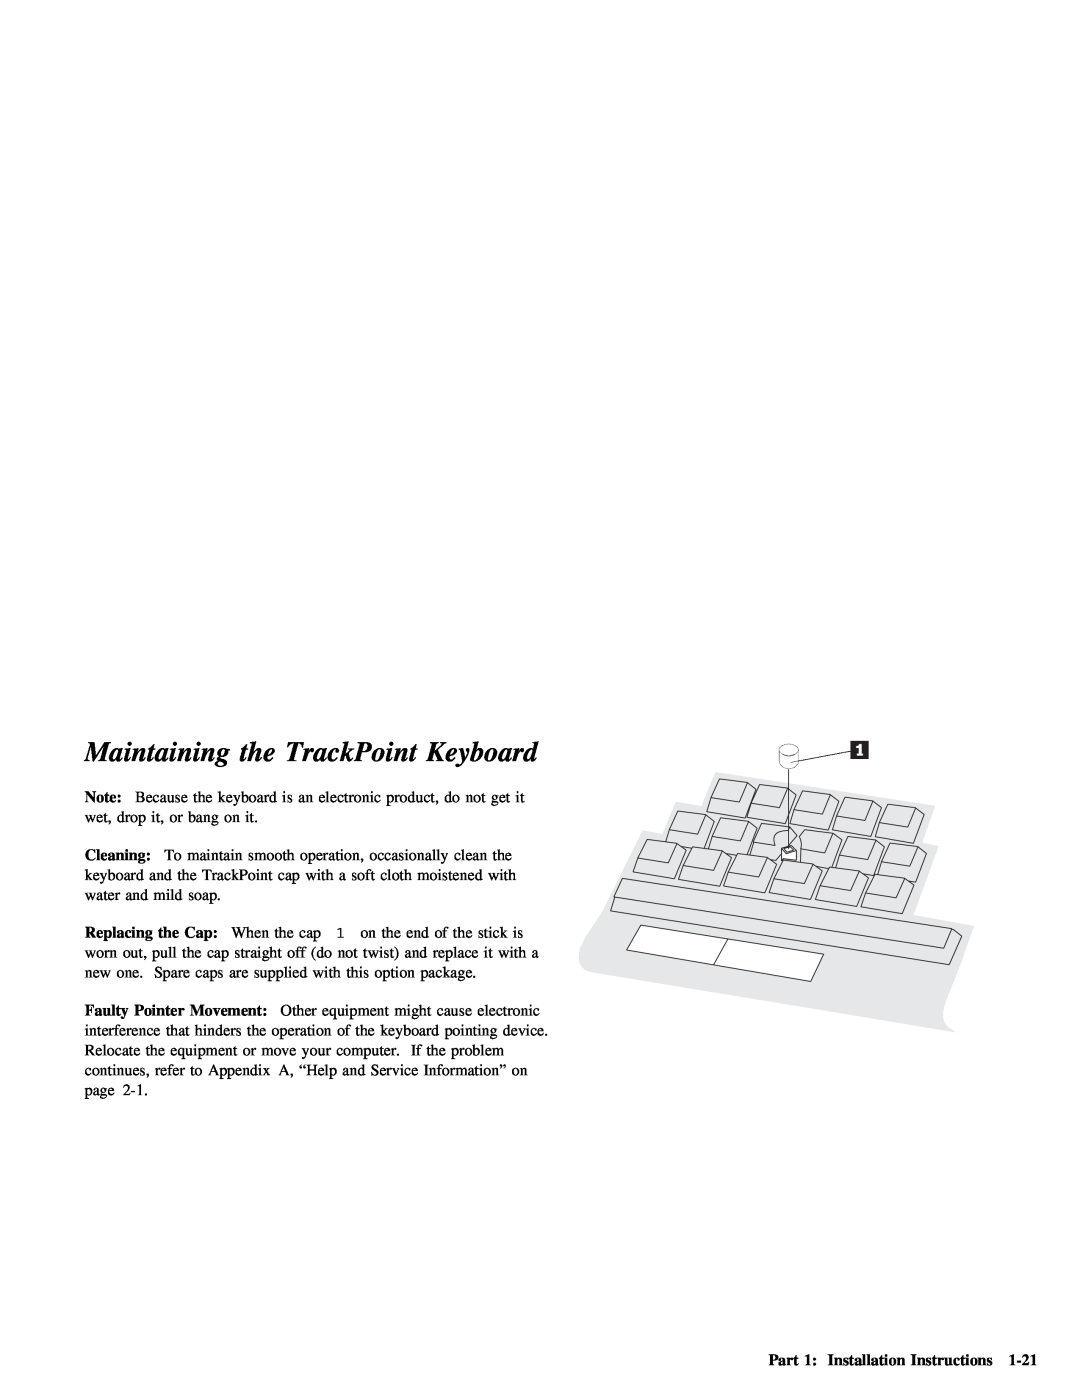 IBM Partner Pavilion TrackPoint manual Keyboard, Maintaining 